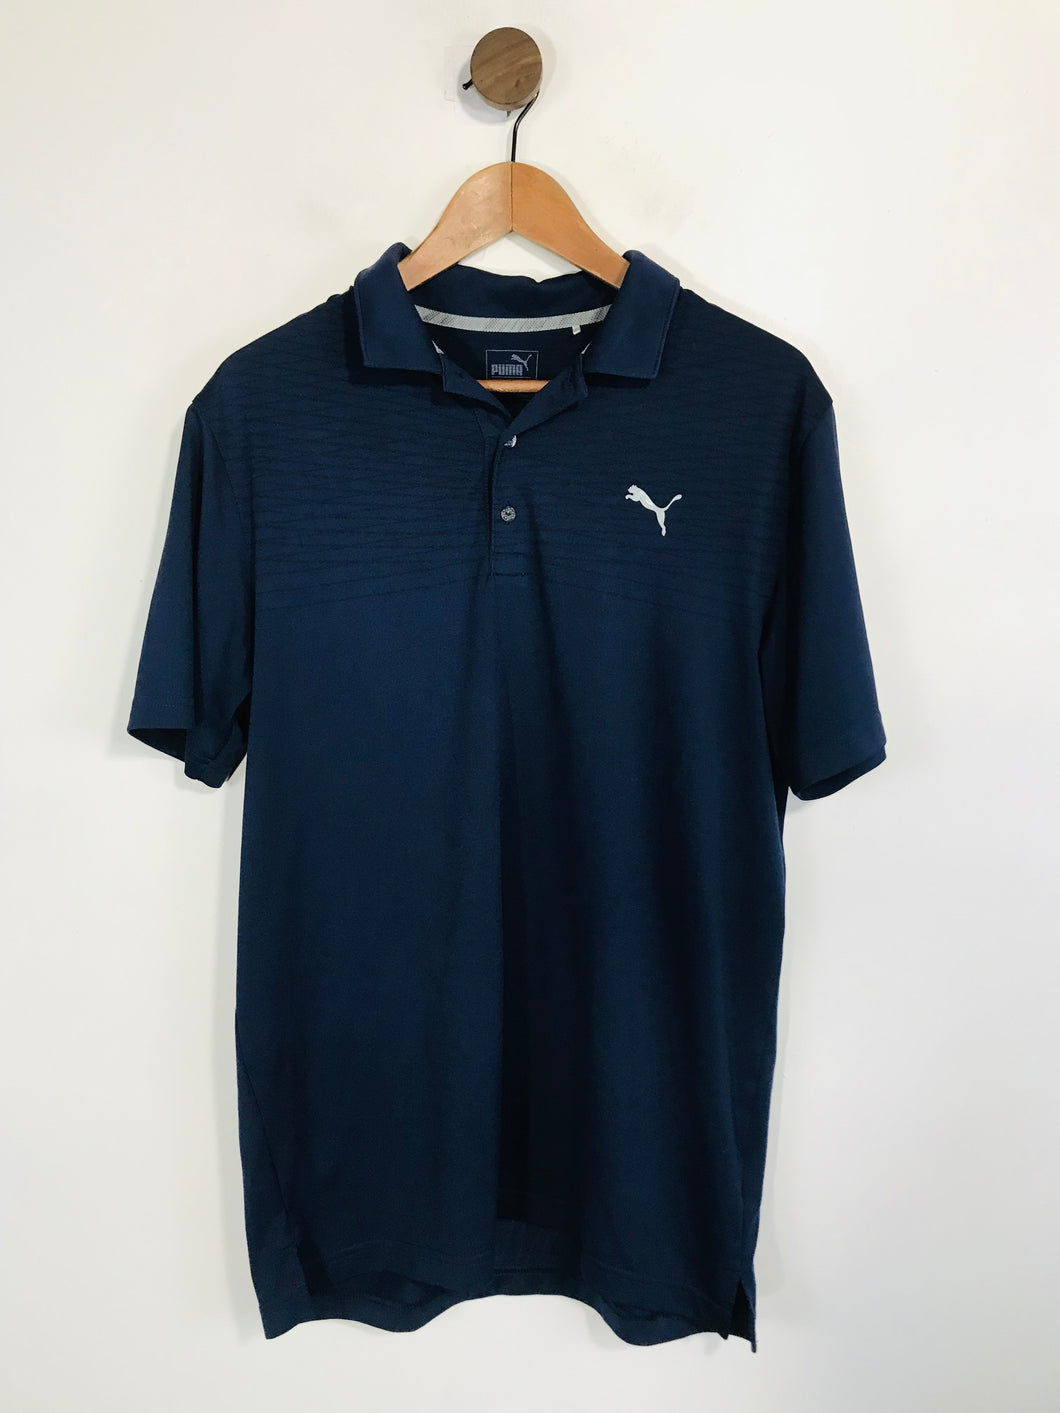 Puma Men's Golf Polo Shirt | L | Blue